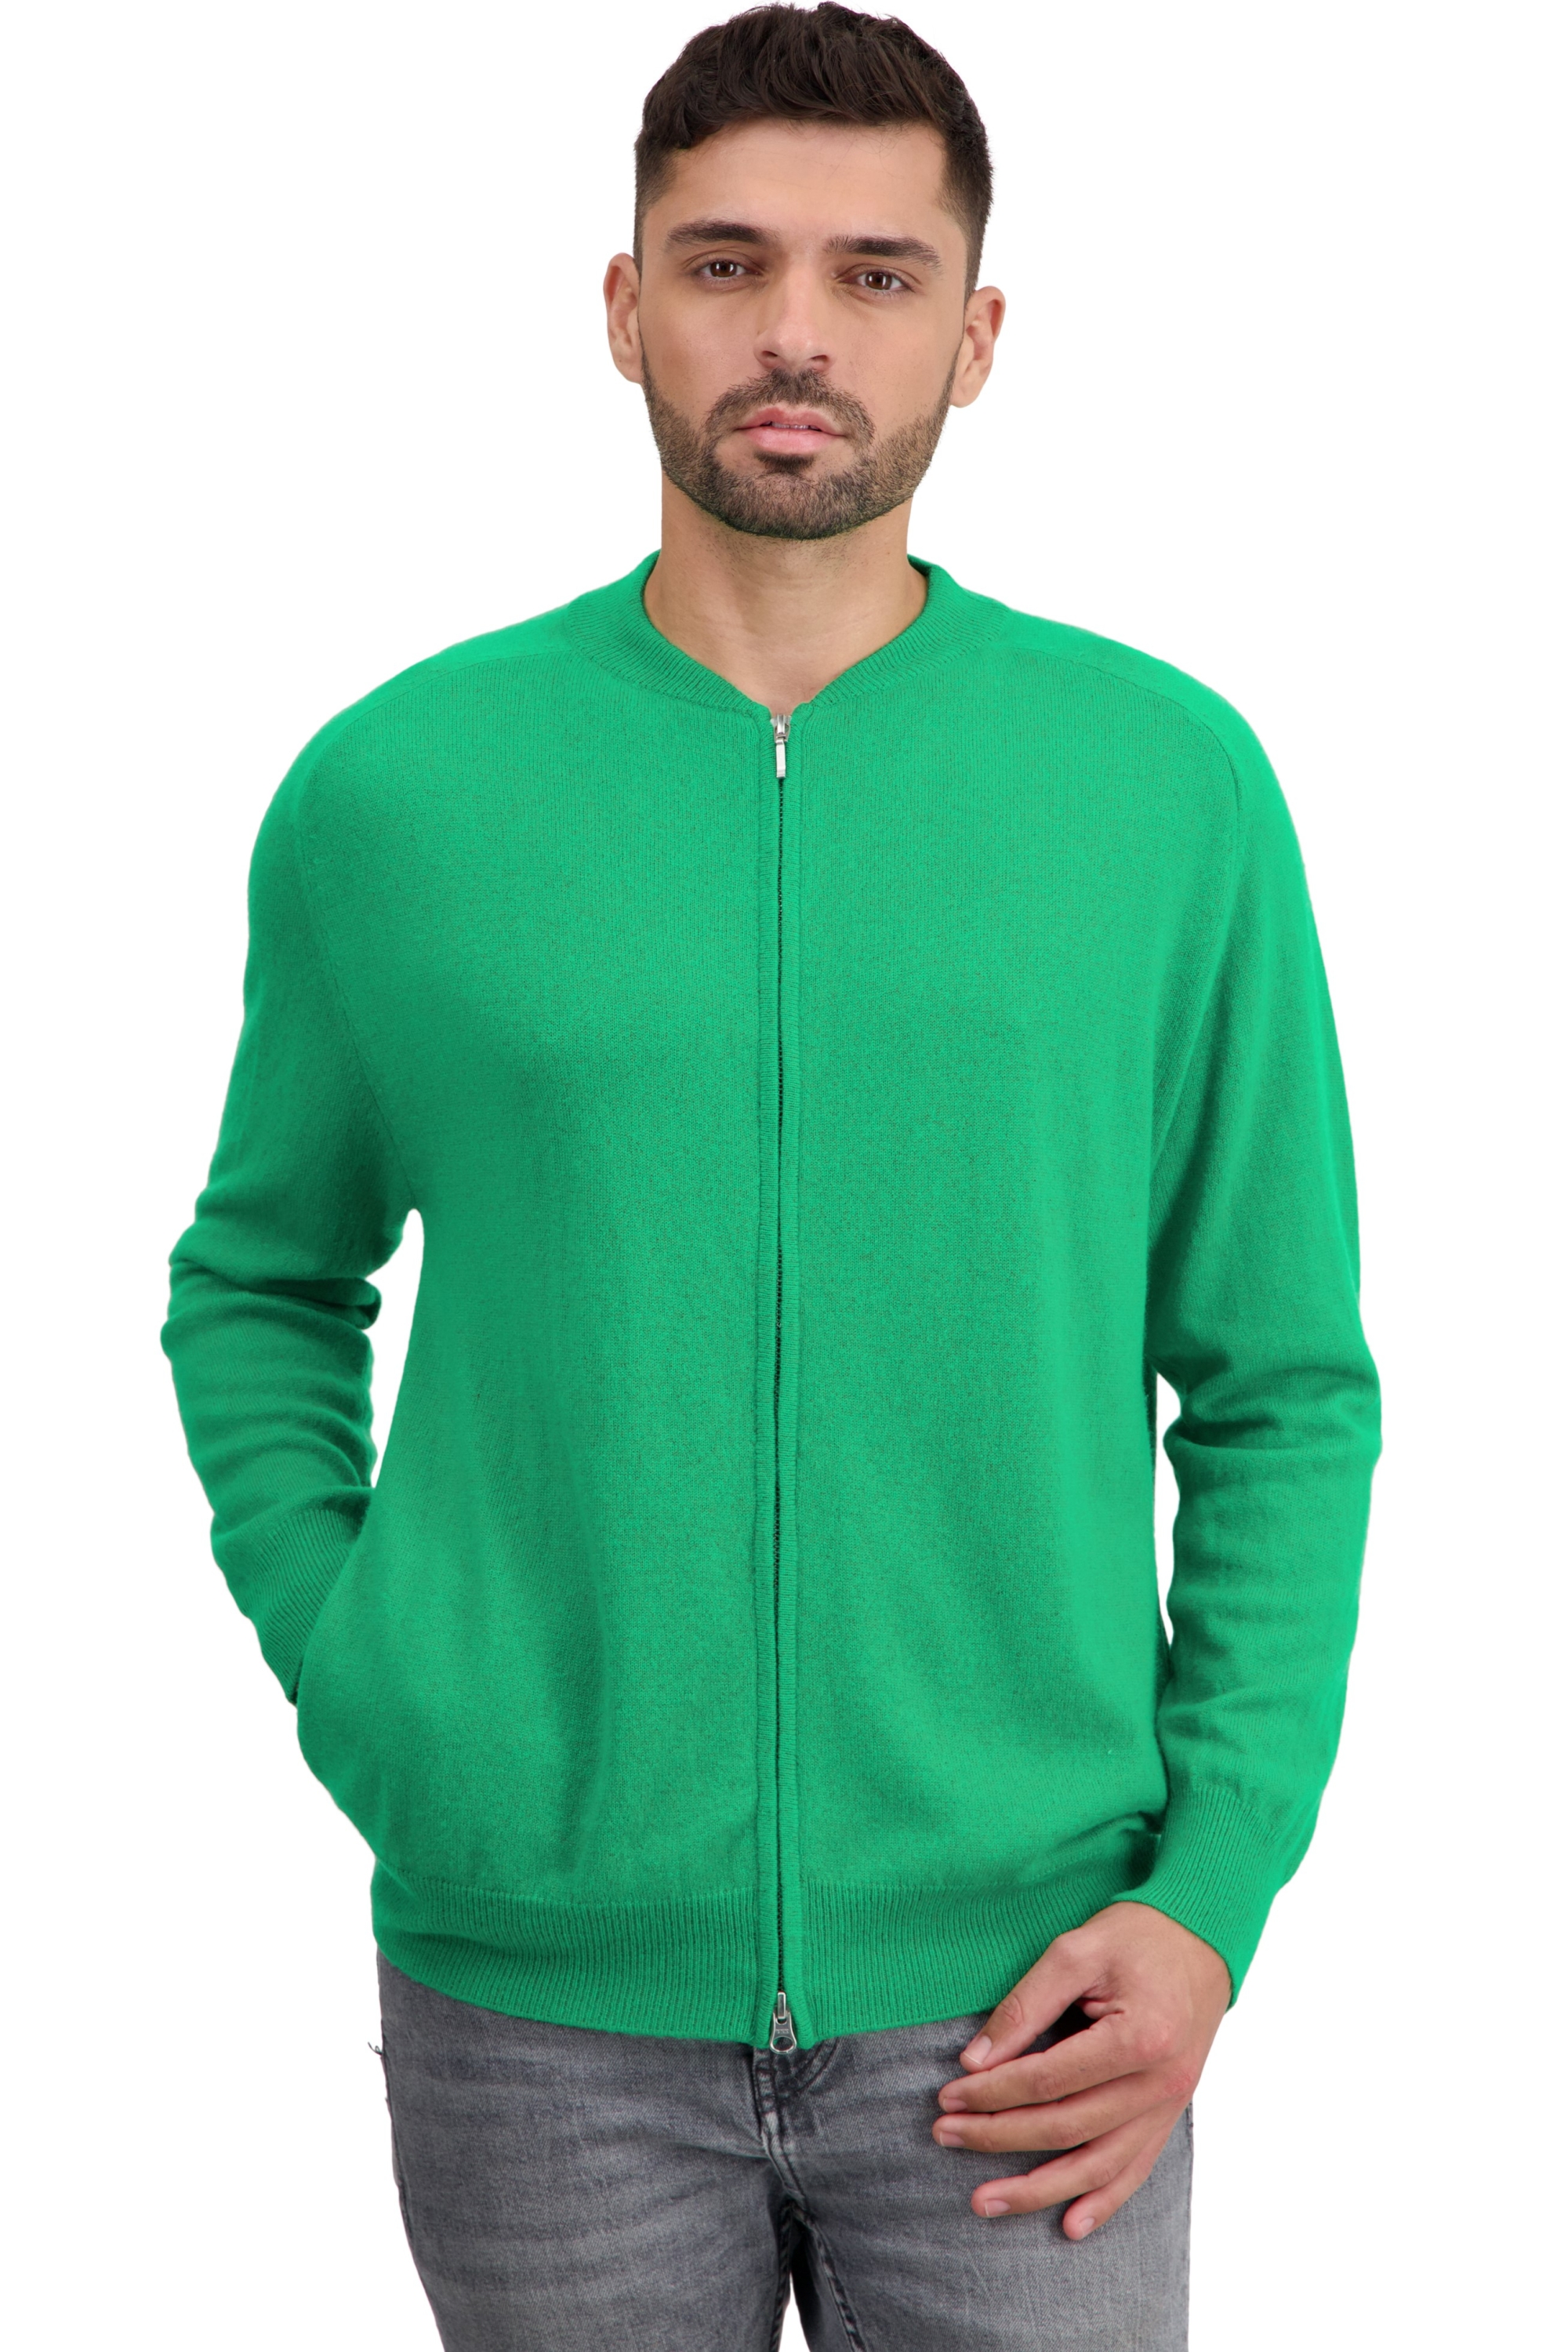 Cashmere men waistcoat sleeveless sweaters tajmahal new green 2xl